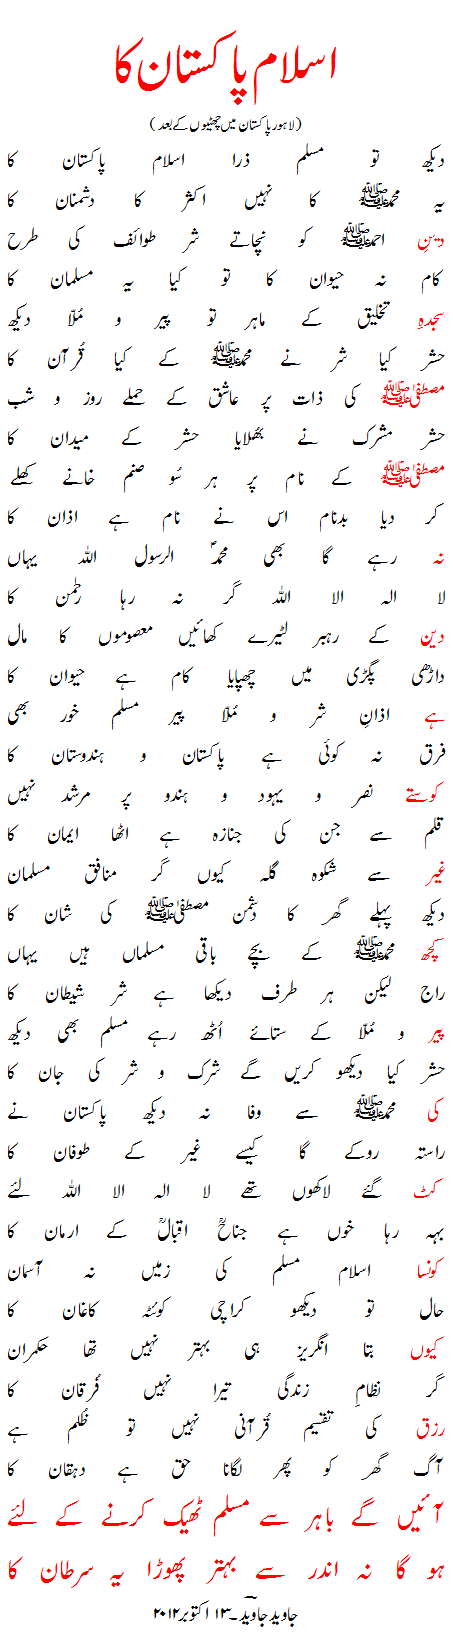 Islam Pakistan ka or Islam of Pakistan, poem by Javed Javed